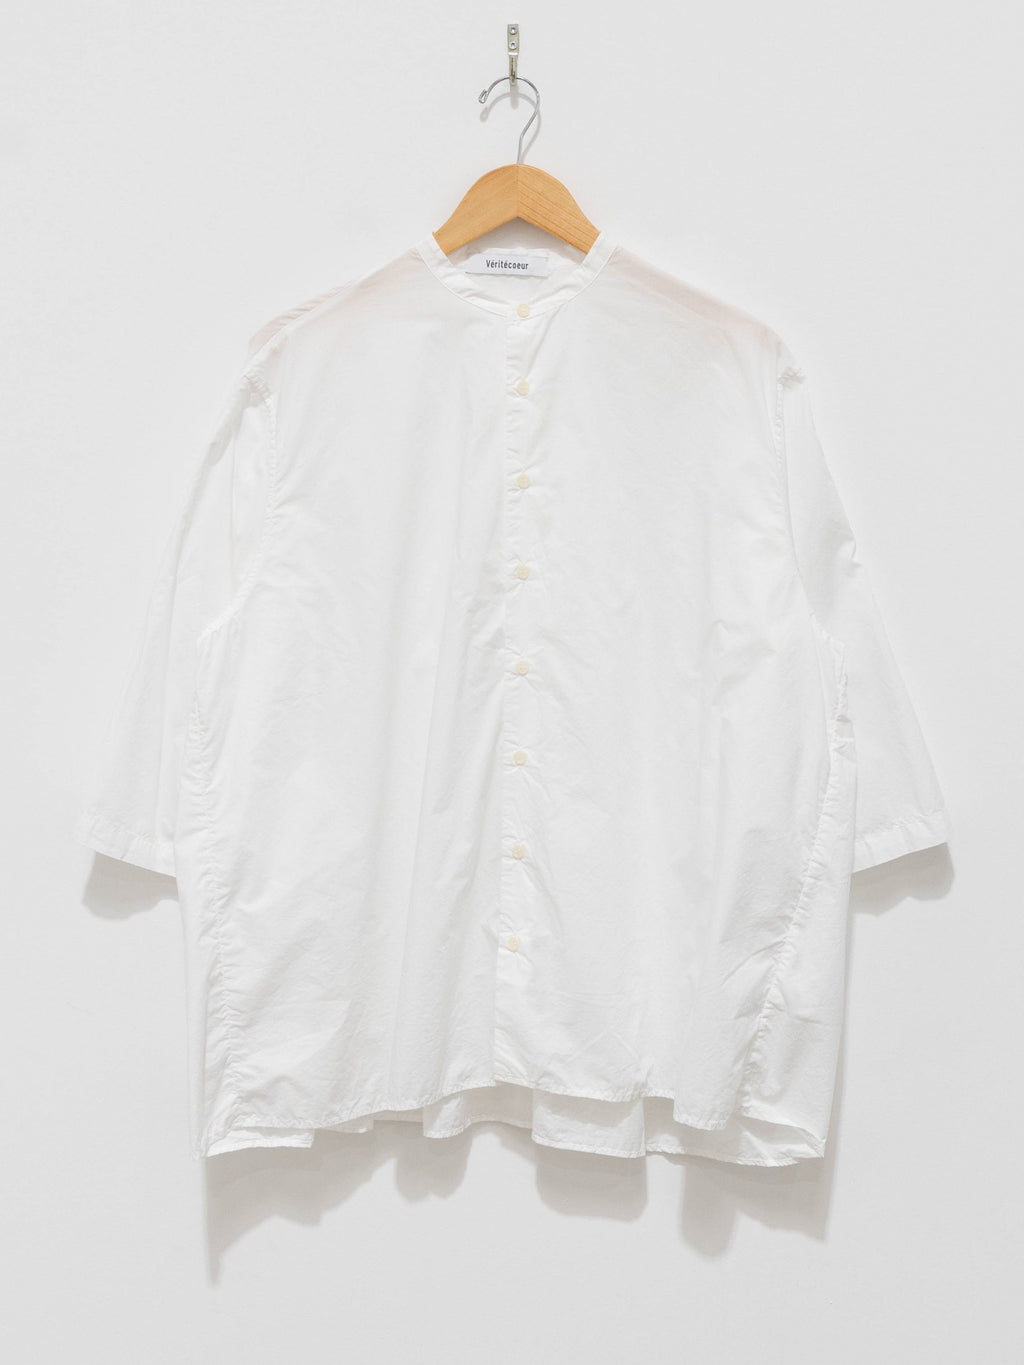 Namu Shop - Veritecoeur Band Collar Gather Back Shirt - White